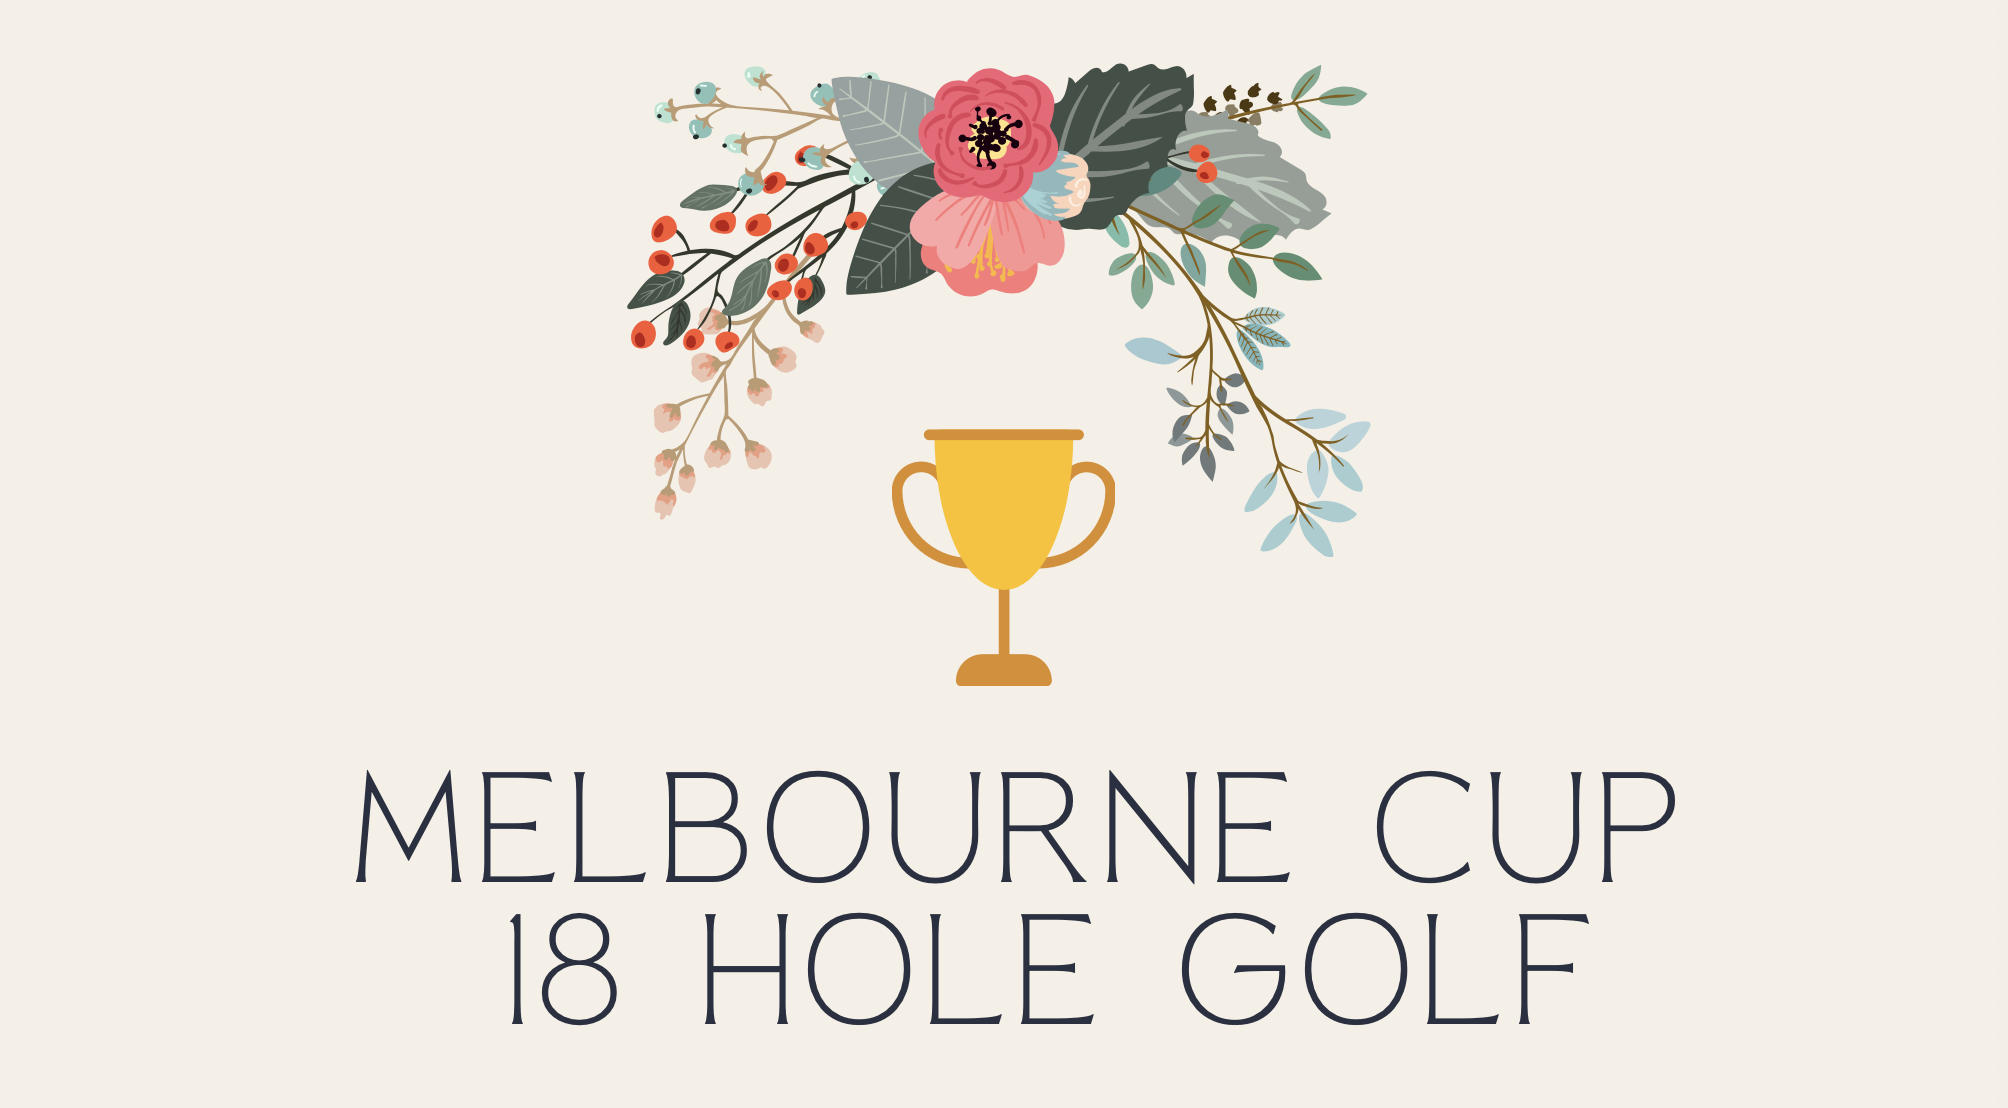 Melbourne Cup 18 Hole Golf